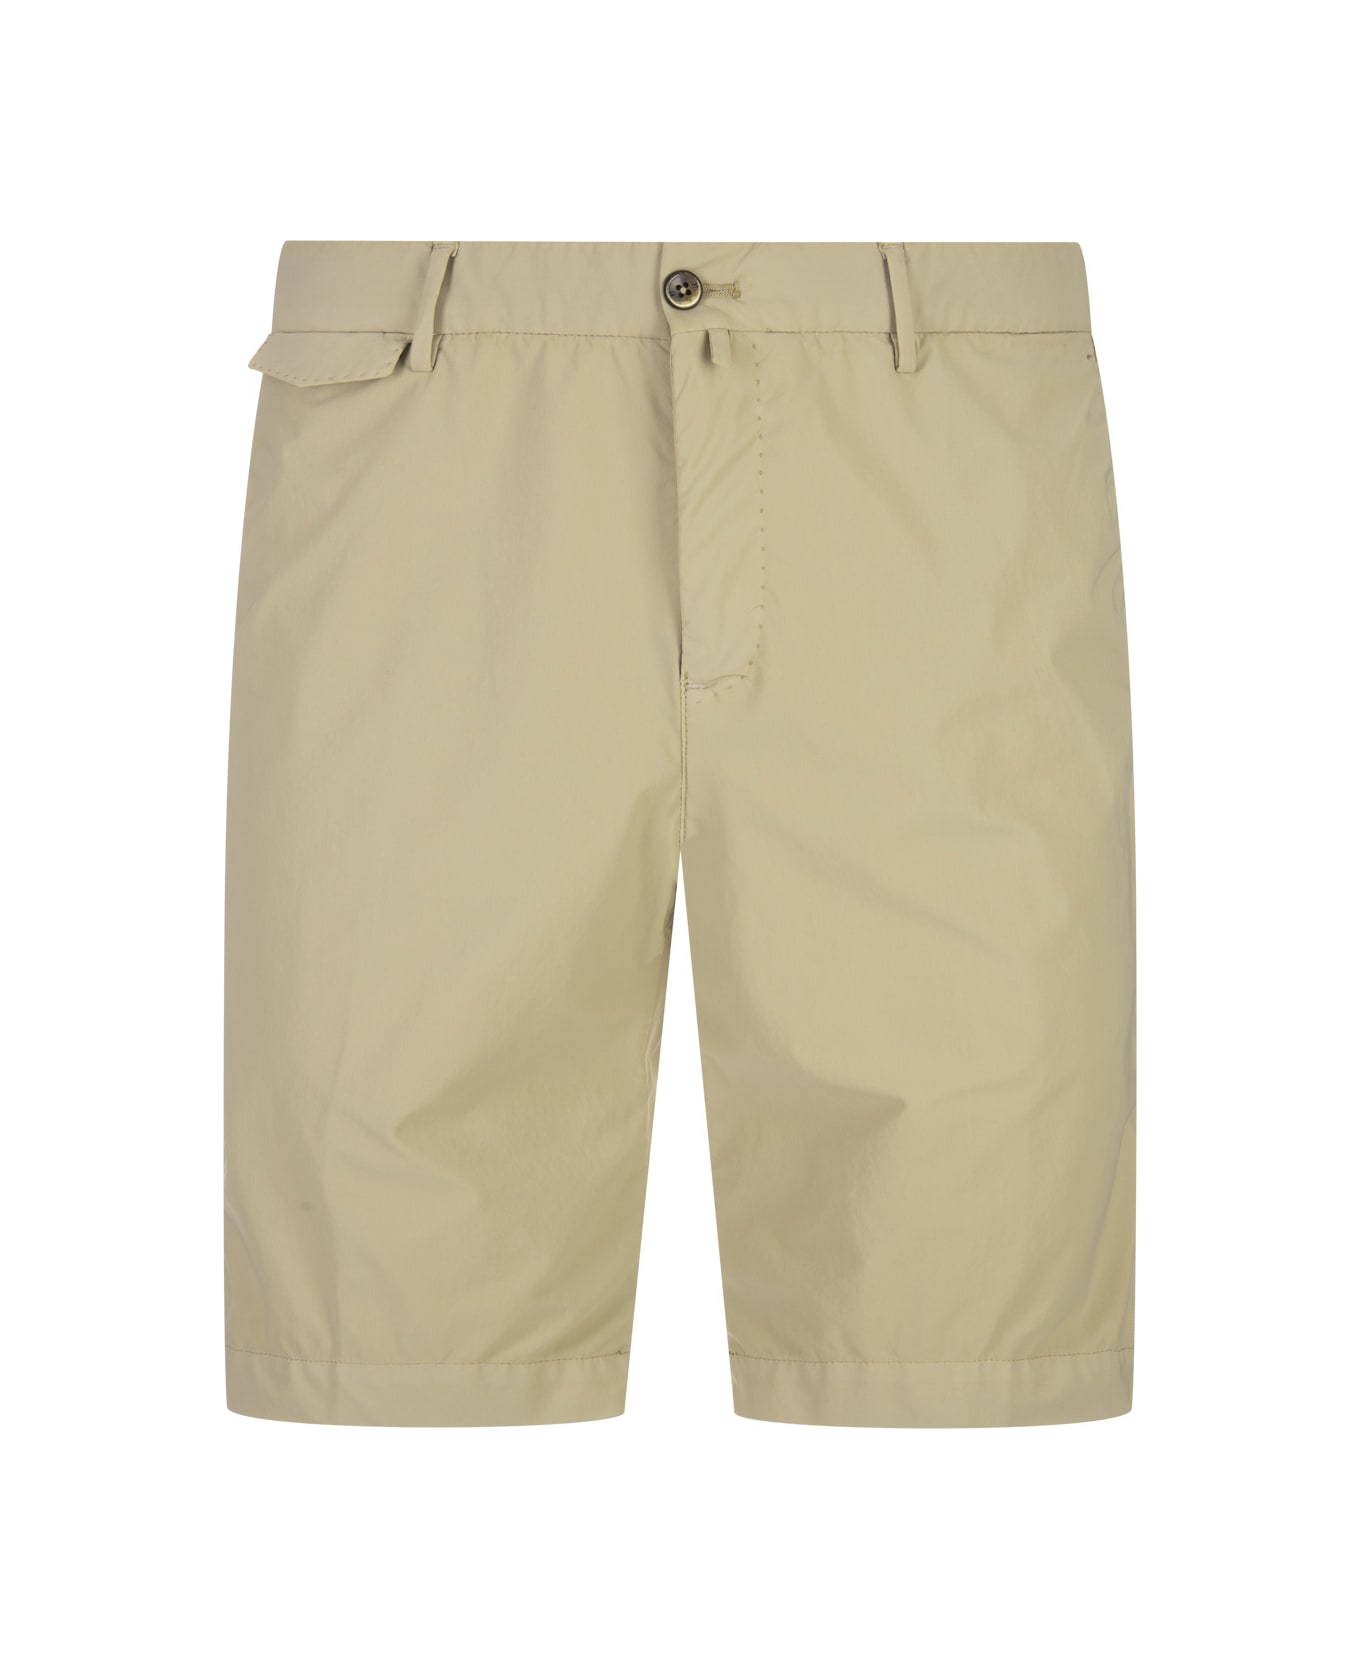 PT Bermuda Green Stretch Cotton Shorts - Green ショートパンツ